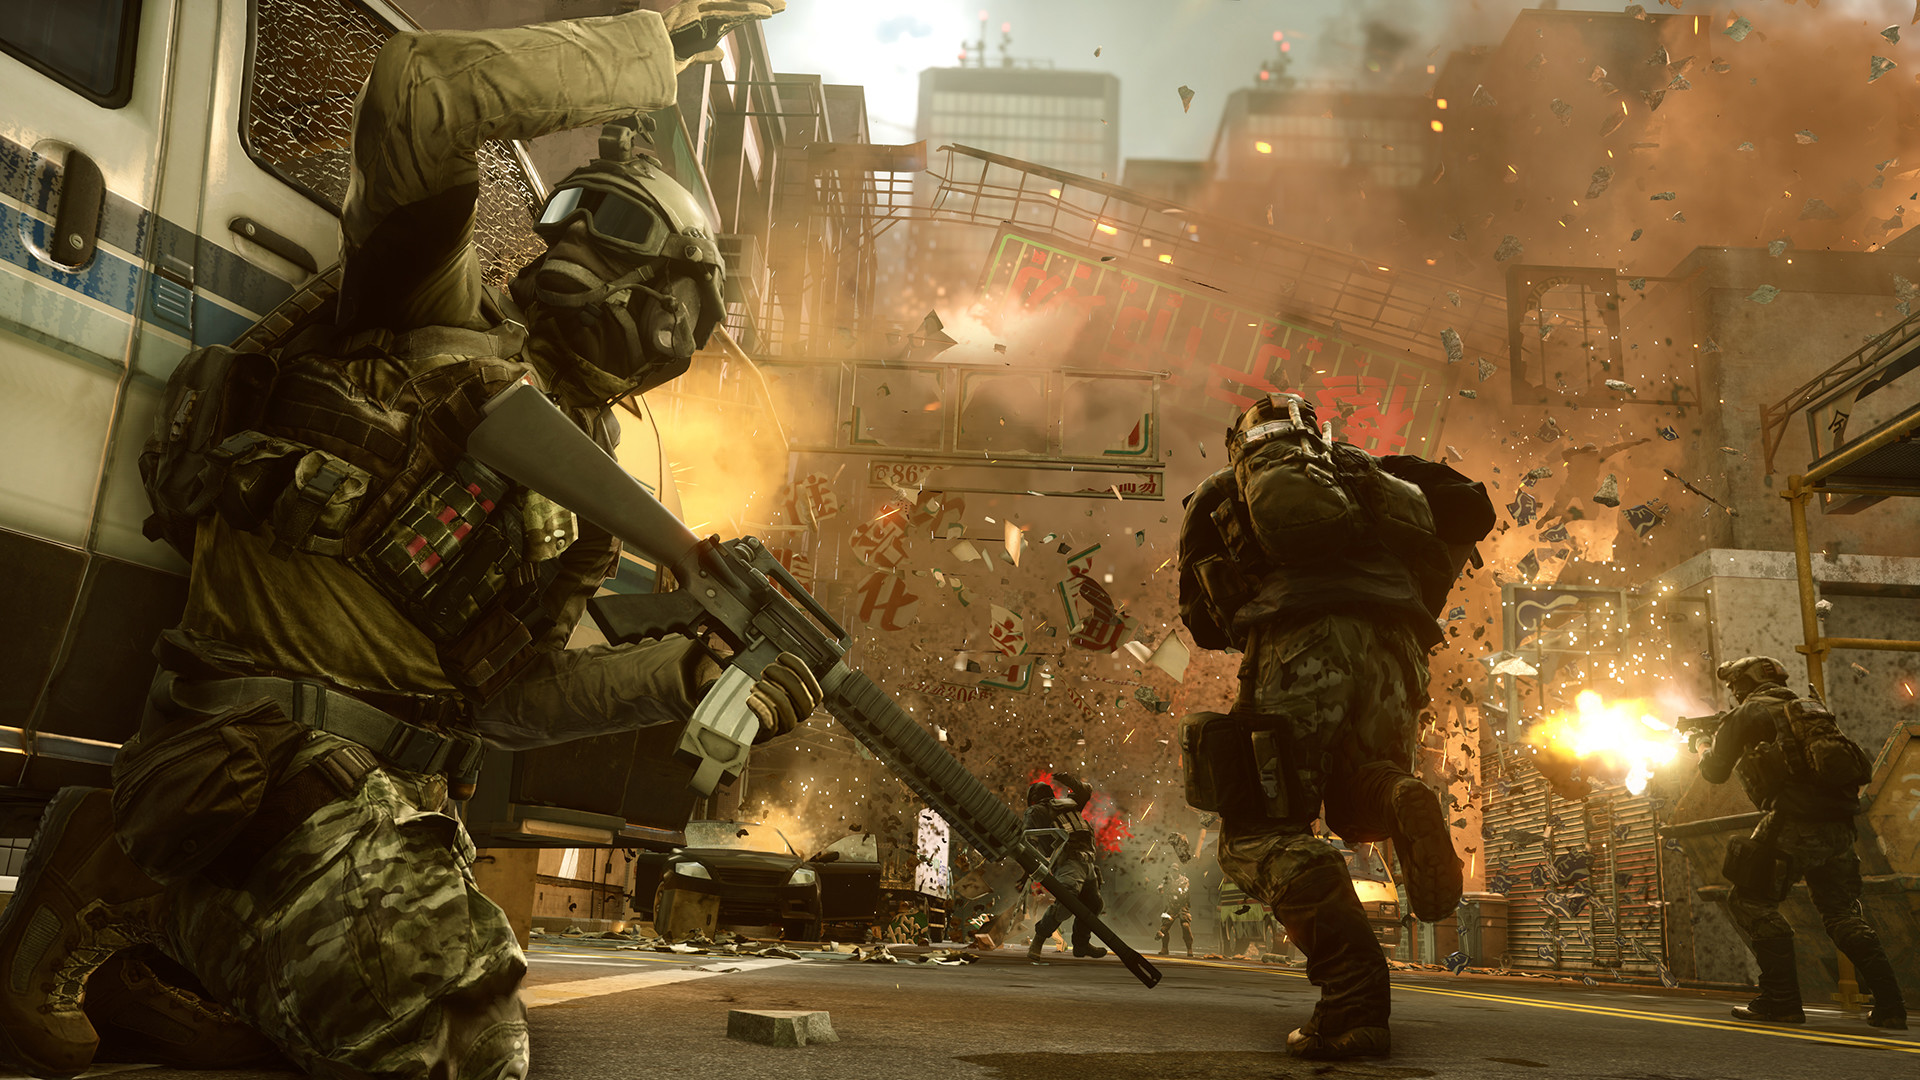 Скриншот Battlefield 4 Premium Edition | Steam Россия